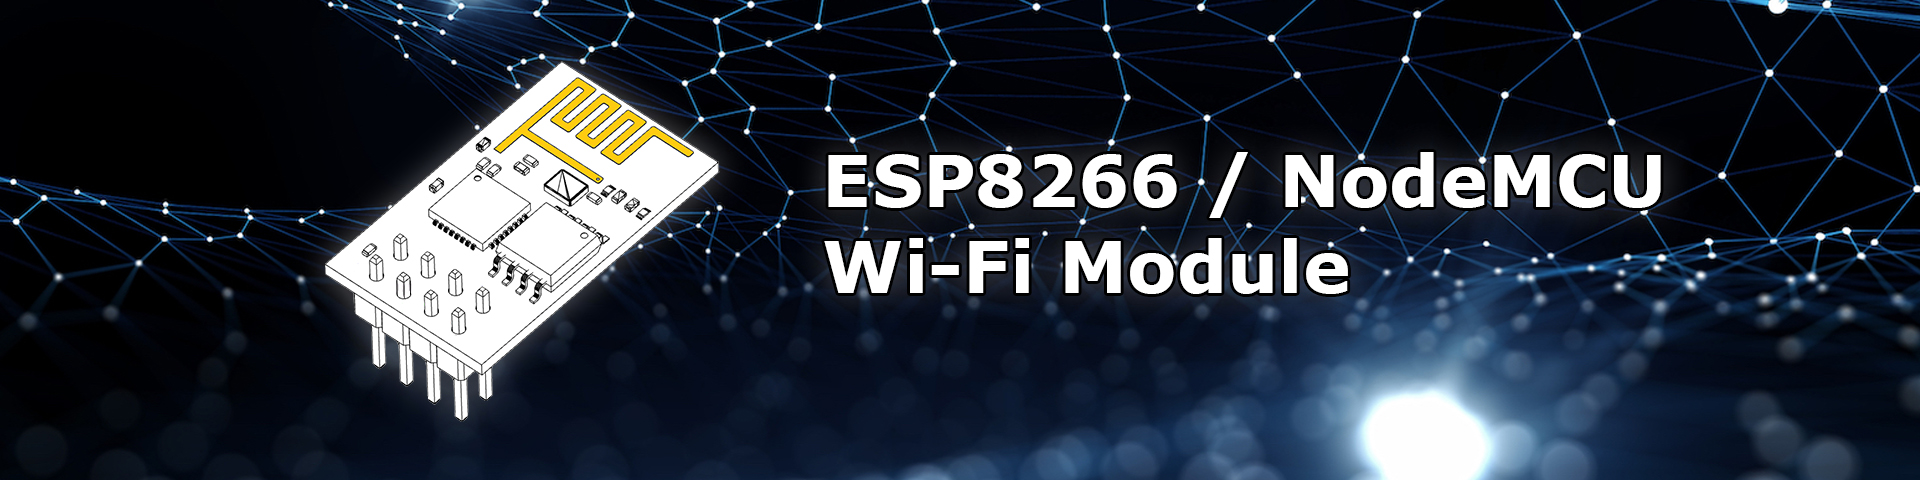 Meet ESP8266 / NodeMCU, the WIFI module for IoT